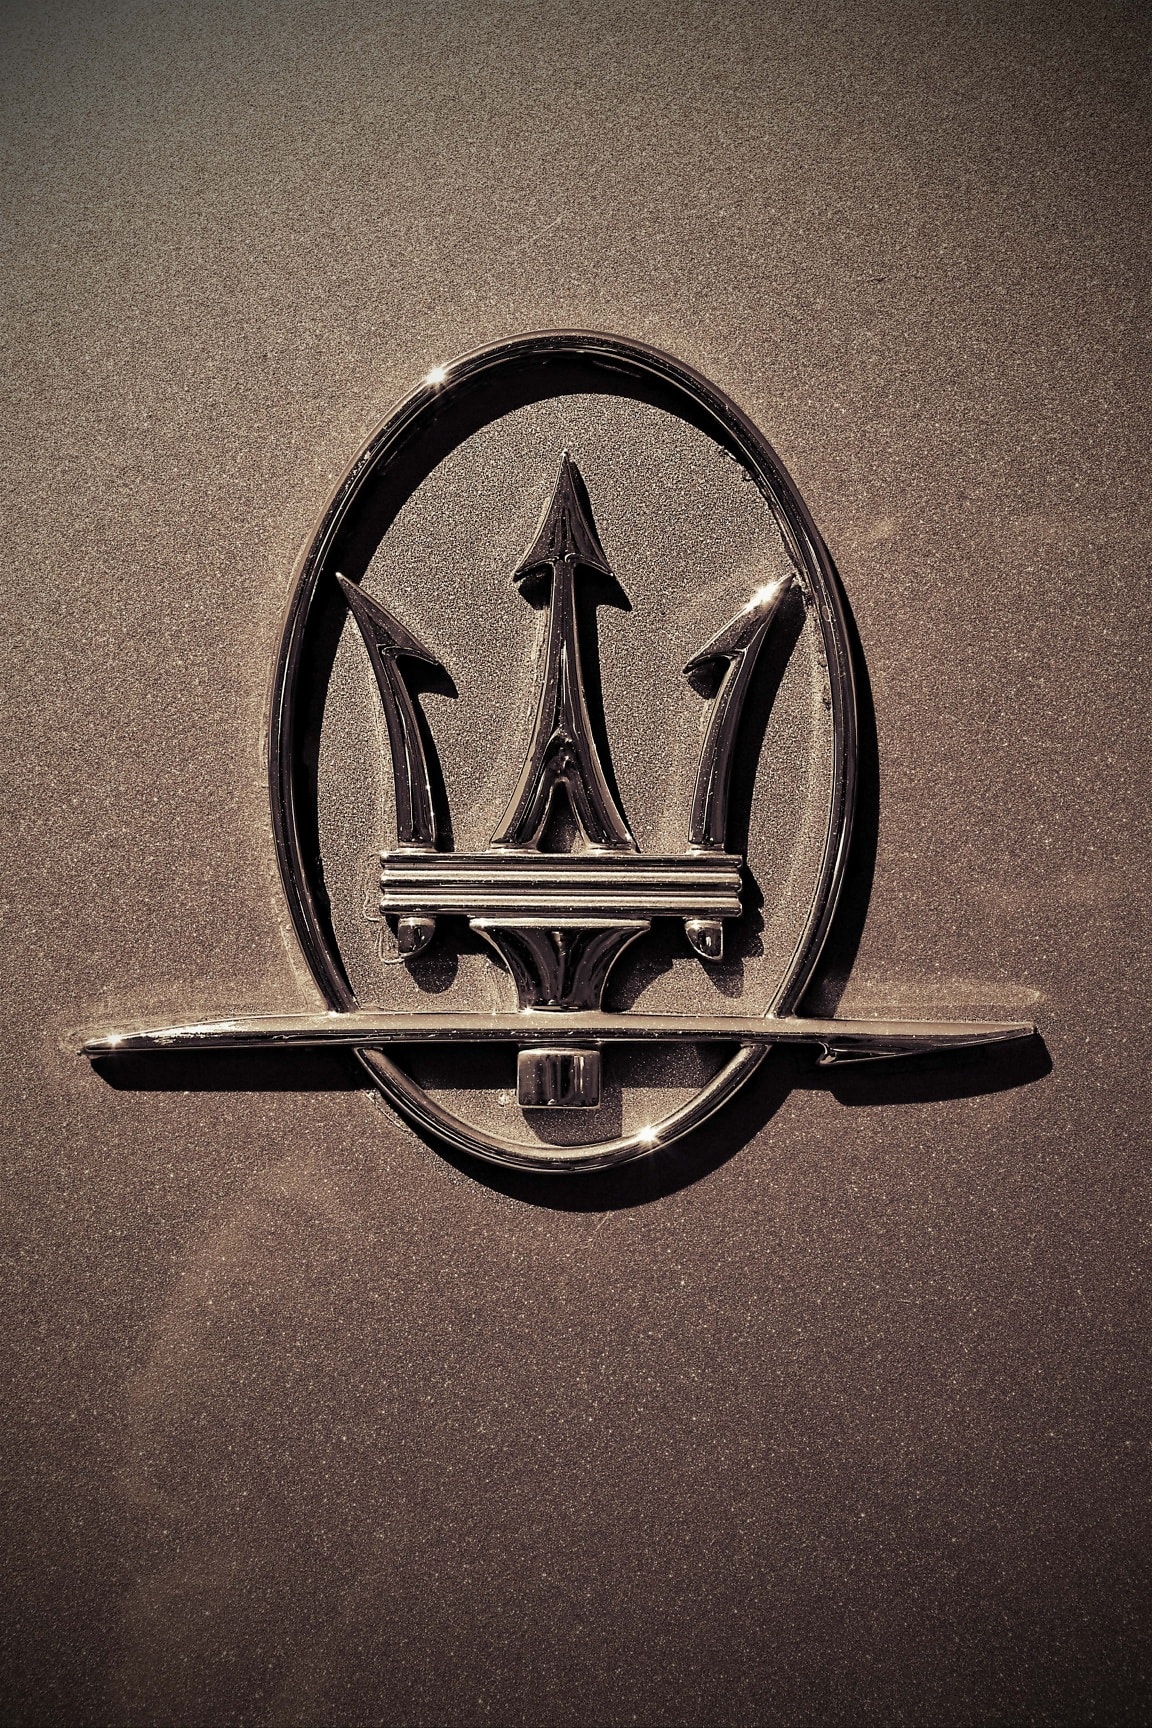 Free picture: Maserati, luxury, symbol, car, sign, chrome, metallic ...